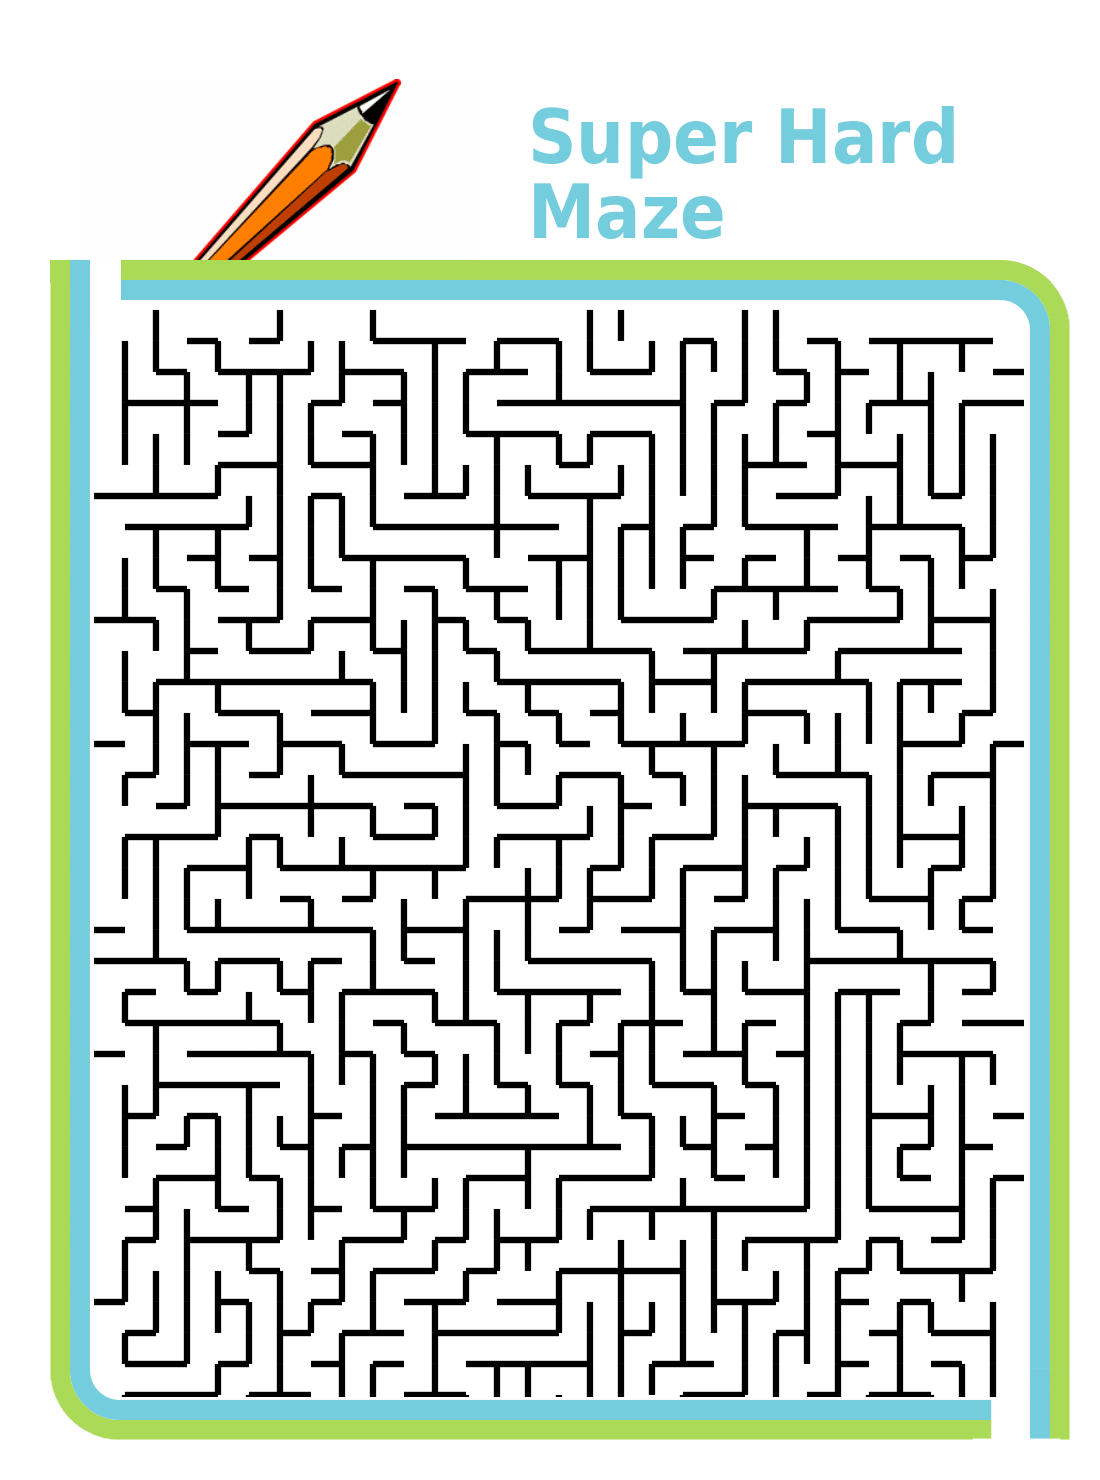 Printable half-sheet maze, difficulty: super hard